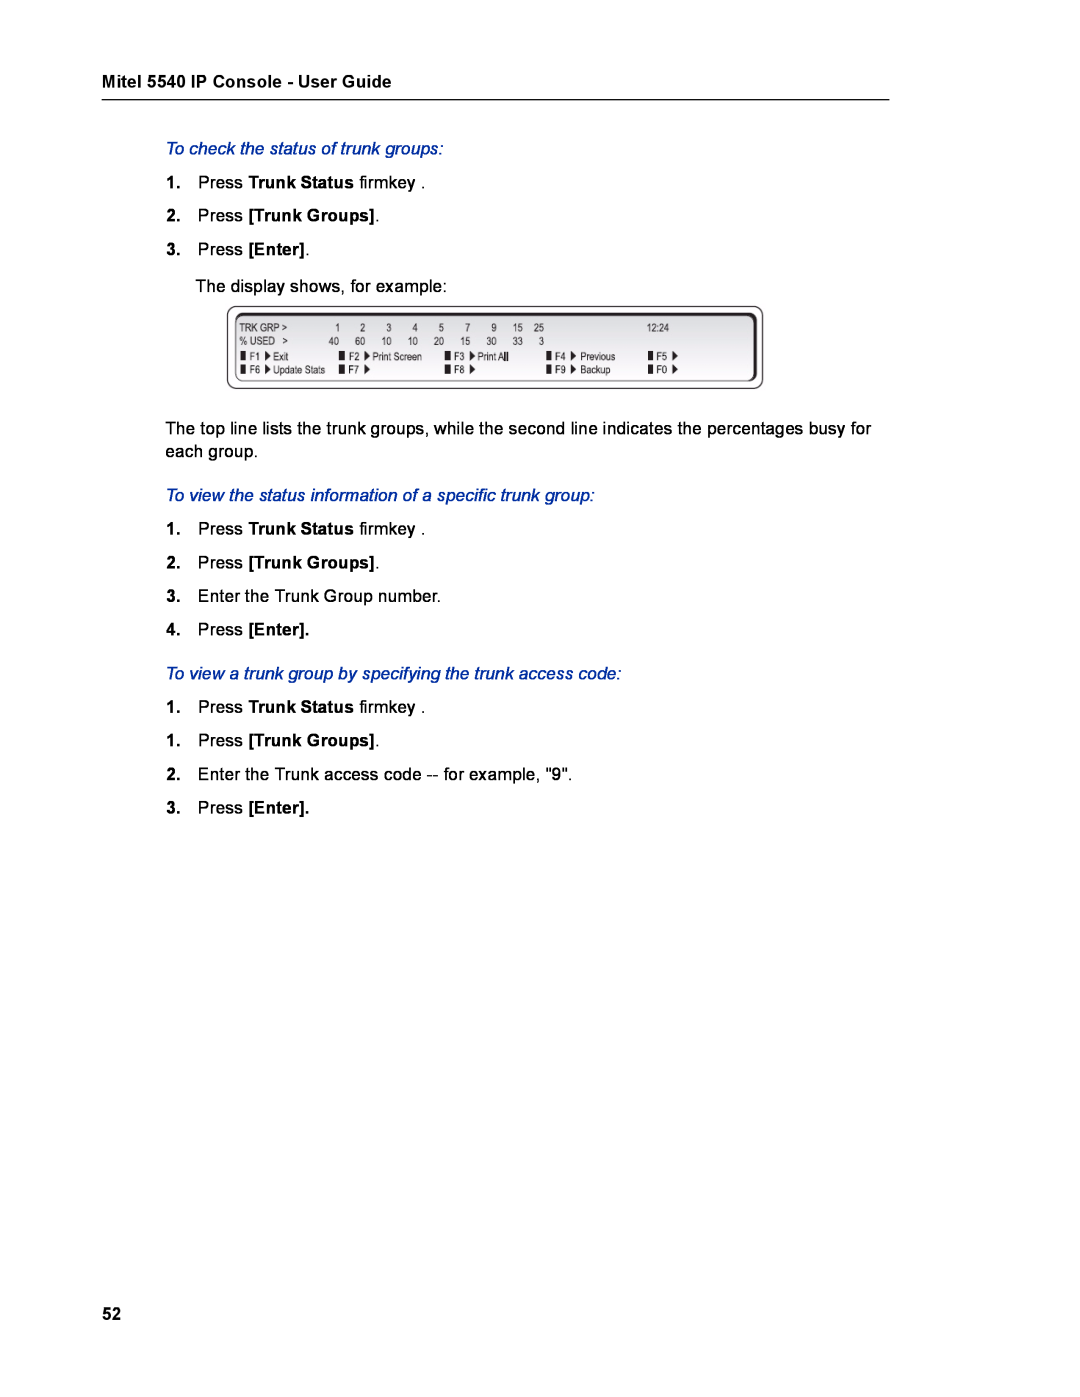 Mitel manual Press Trunk Groups, Press Enter, Mitel 5540 IP Console - User Guide 